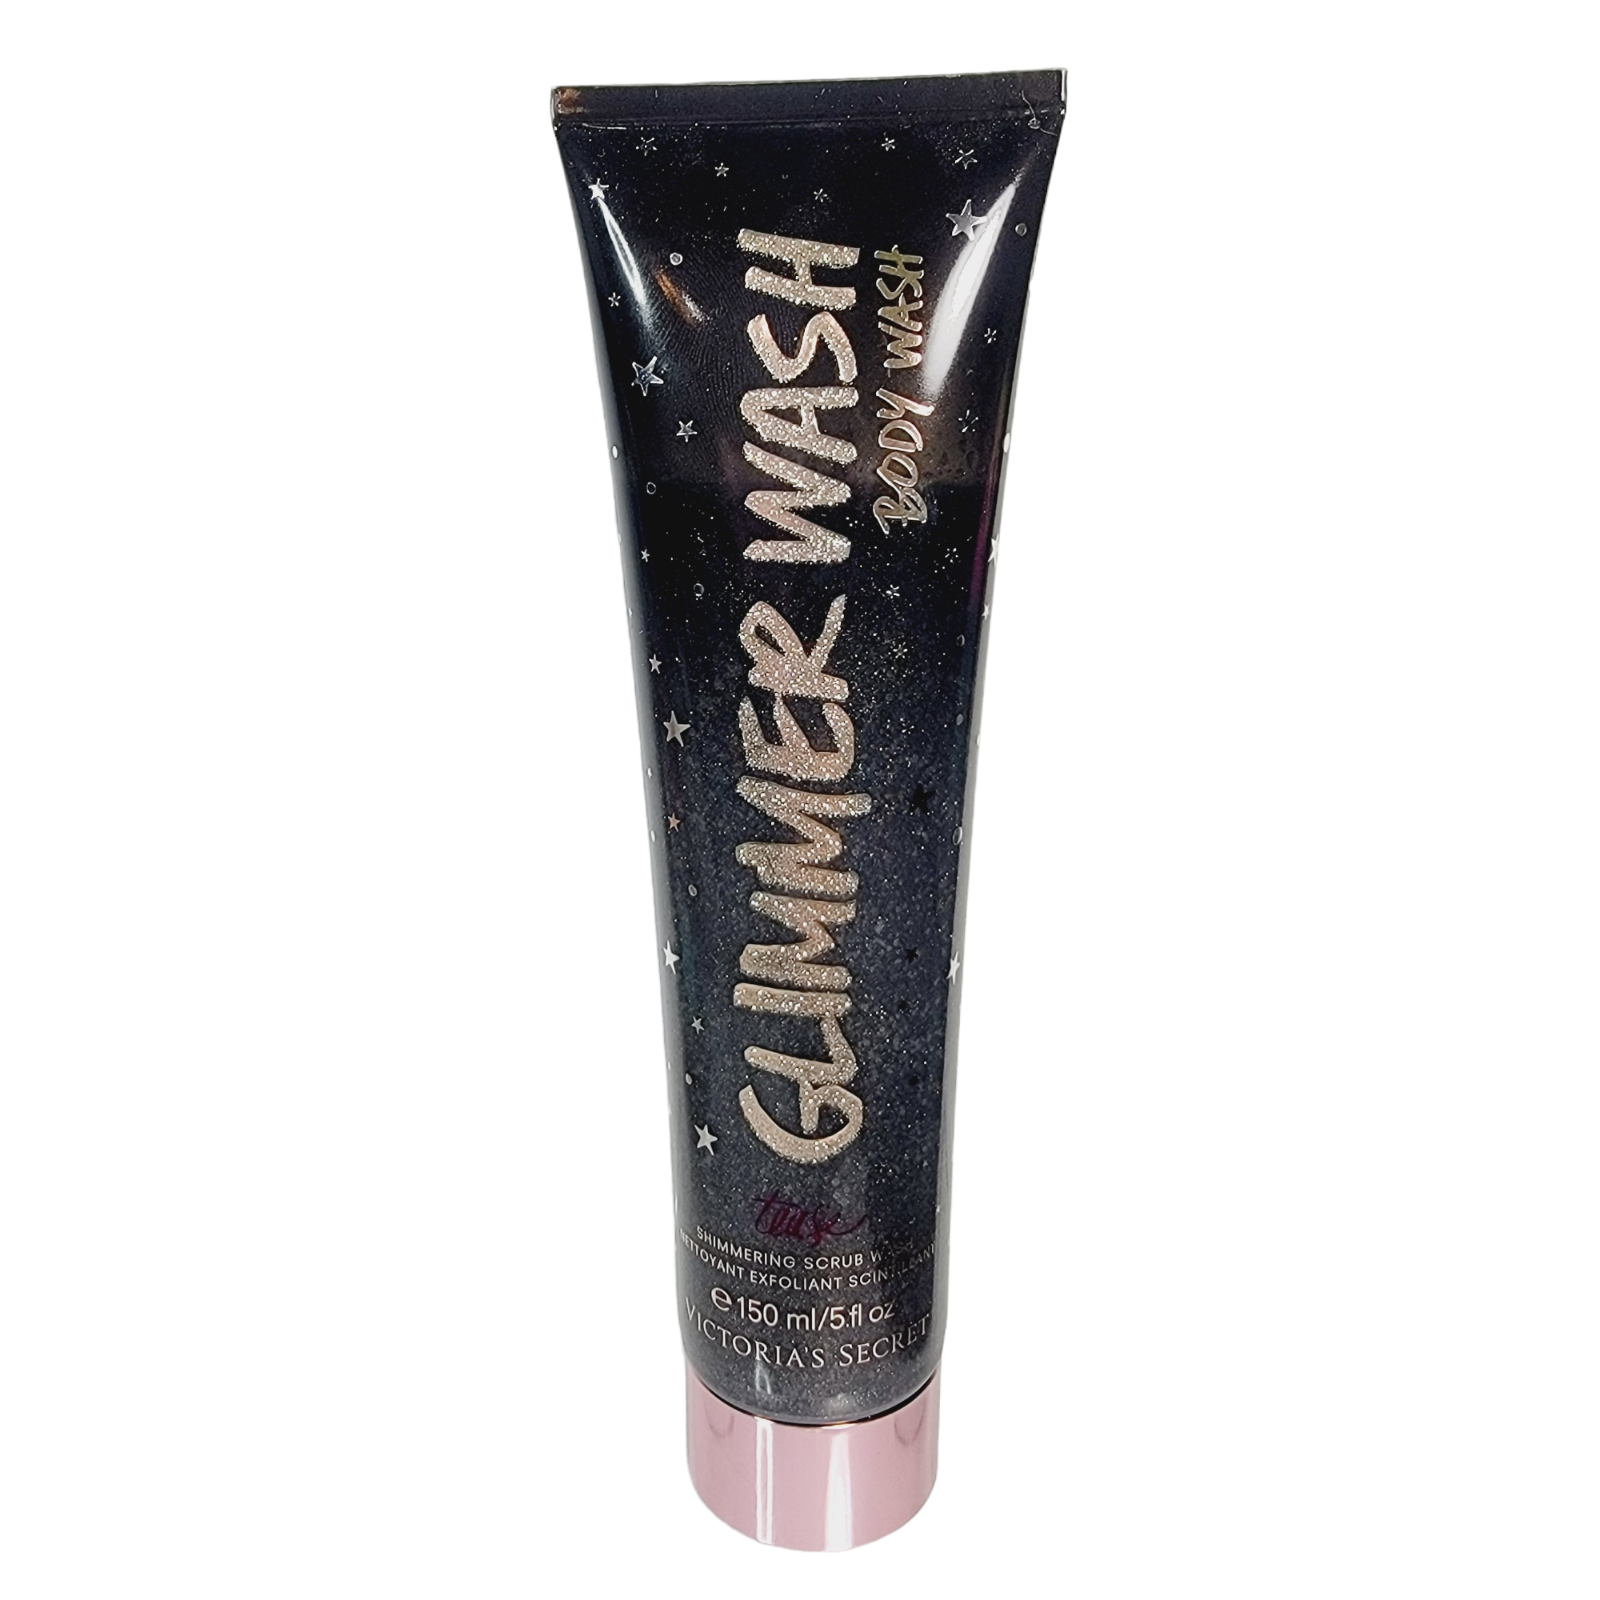 Victoria's Secret TEASE Glimmer Wash Body Shimmering Scrub Wash 5oz New Sealed - $18.87